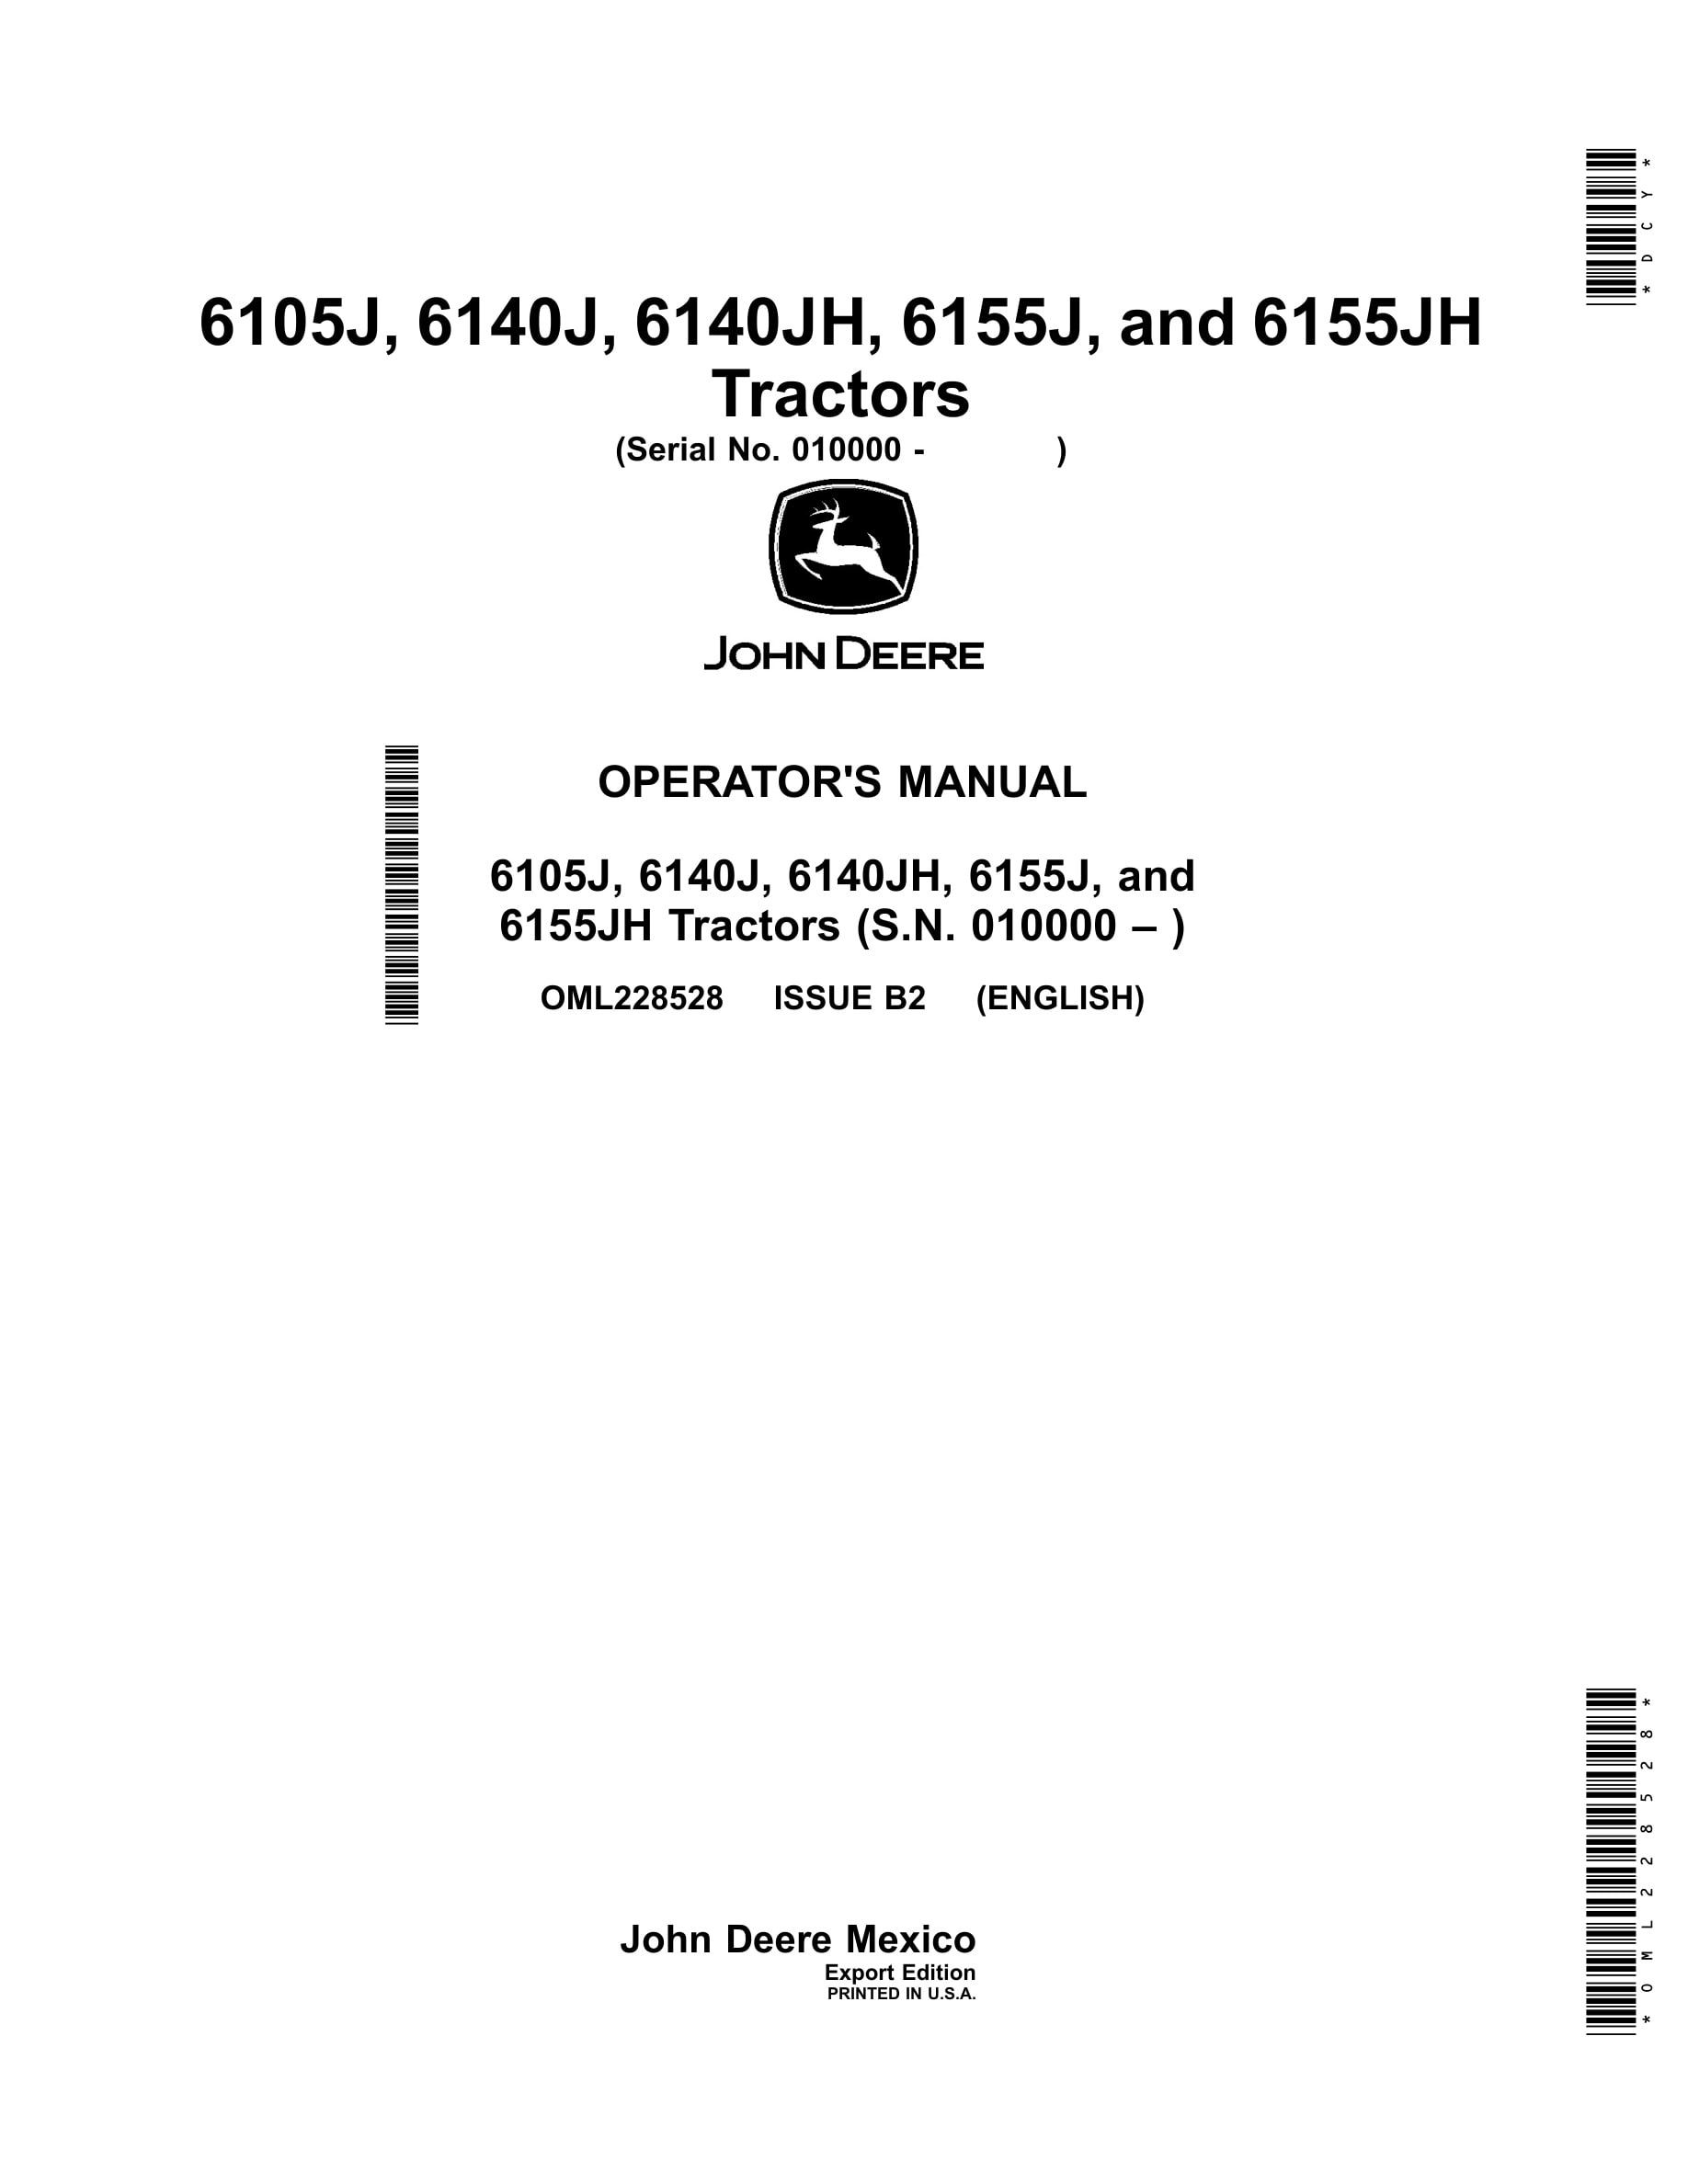 John Deere 6105j, 6140j, 6140jh, 6155j, 6155jh Tractors Operator Manuals OML228528-1